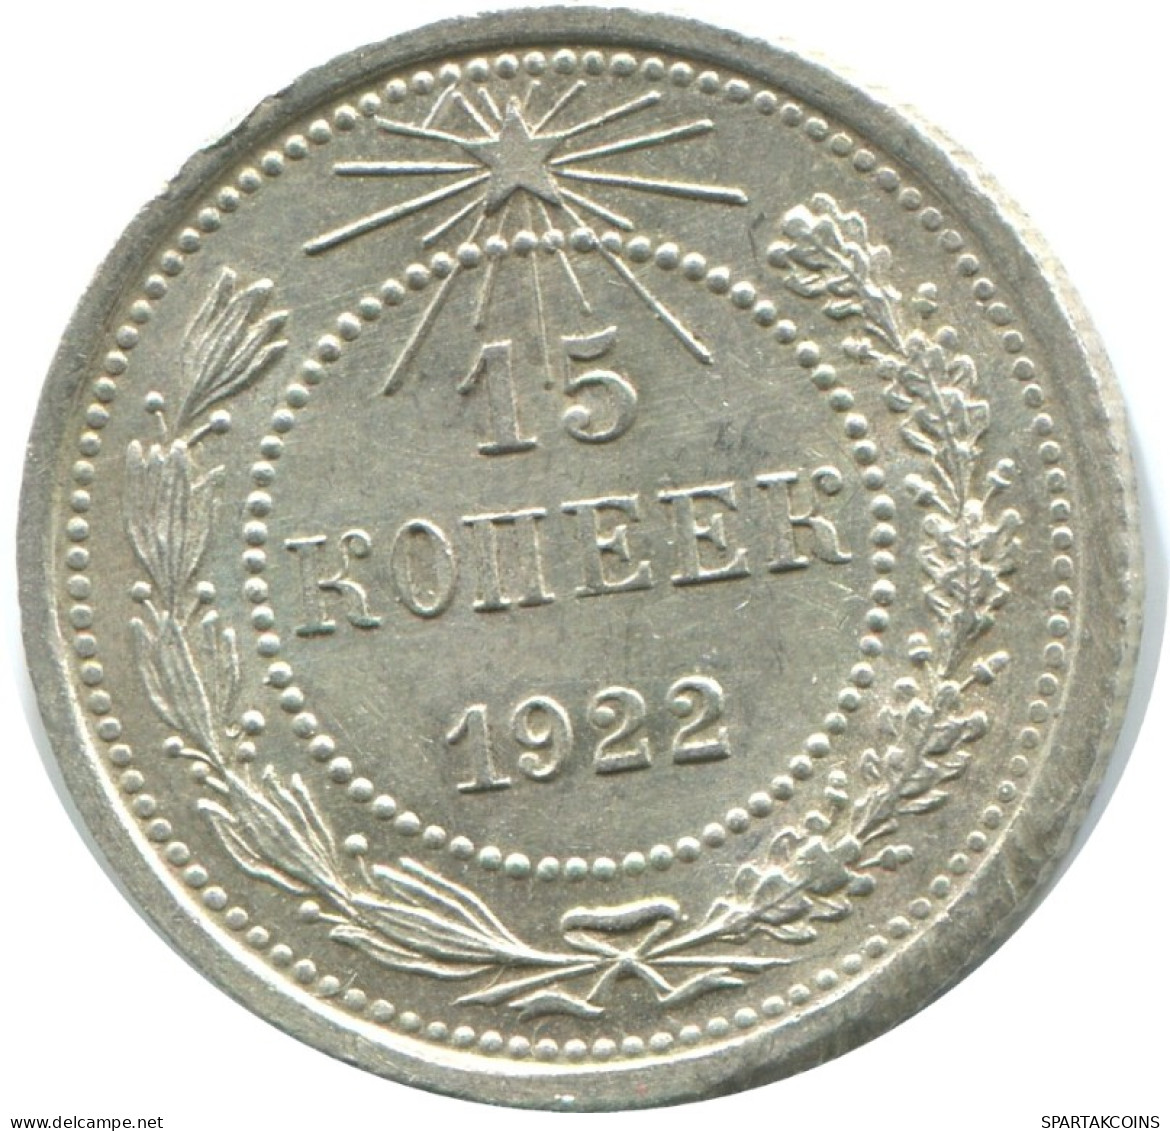 15 KOPEKS 1922 RUSIA RUSSIA RSFSR PLATA Moneda HIGH GRADE #AF178.4.E.A - Russia